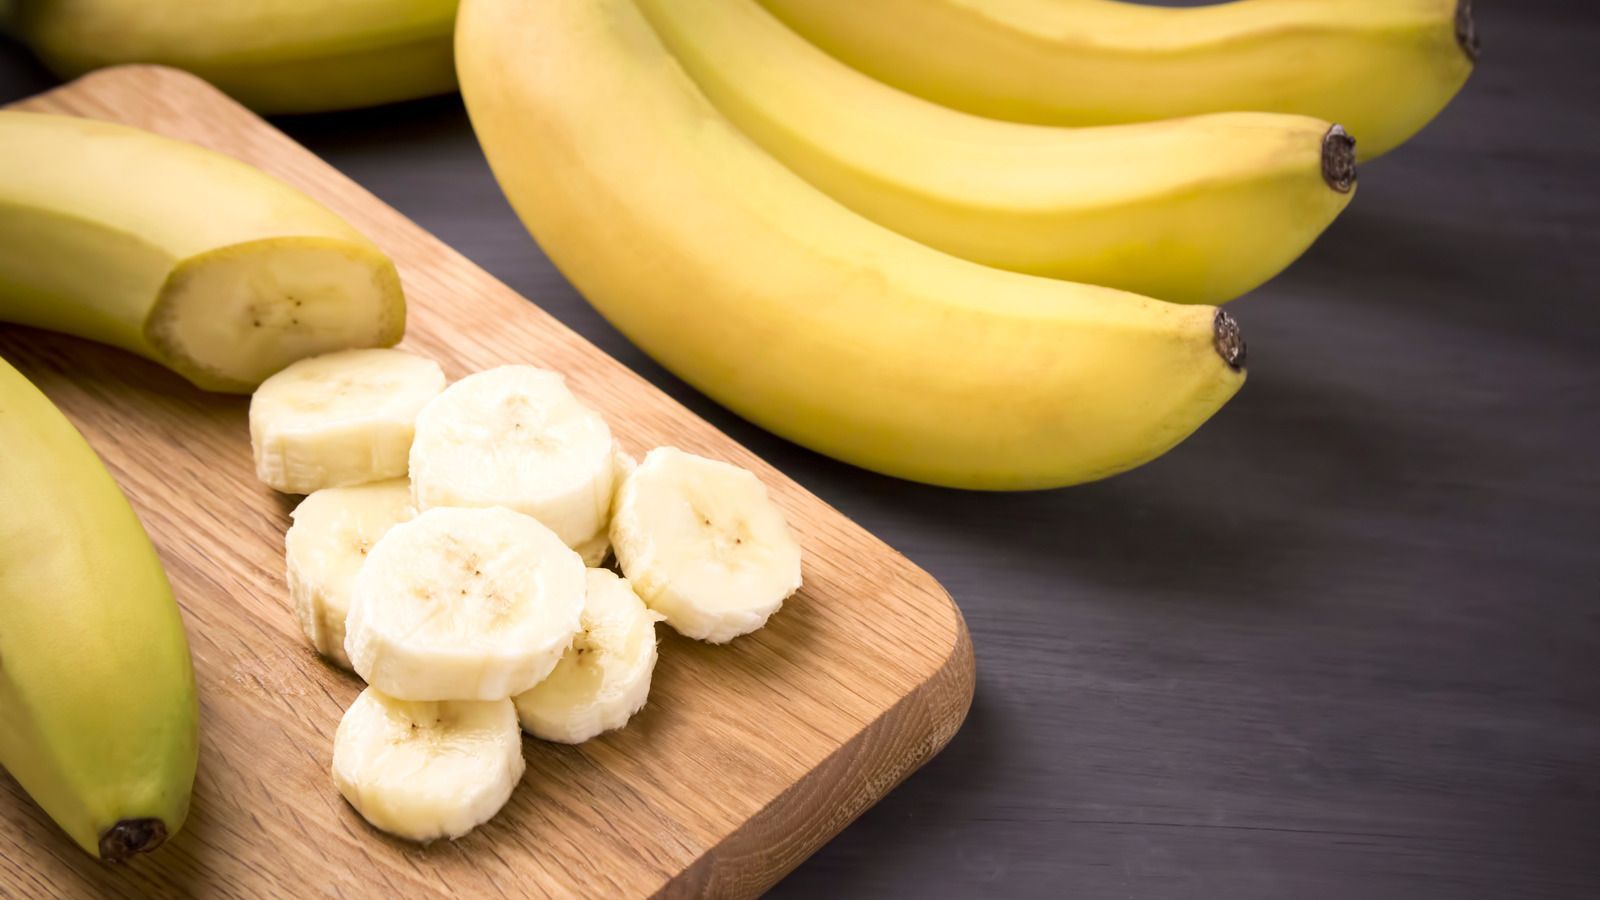 Incredible Skin Benefits of Bananas